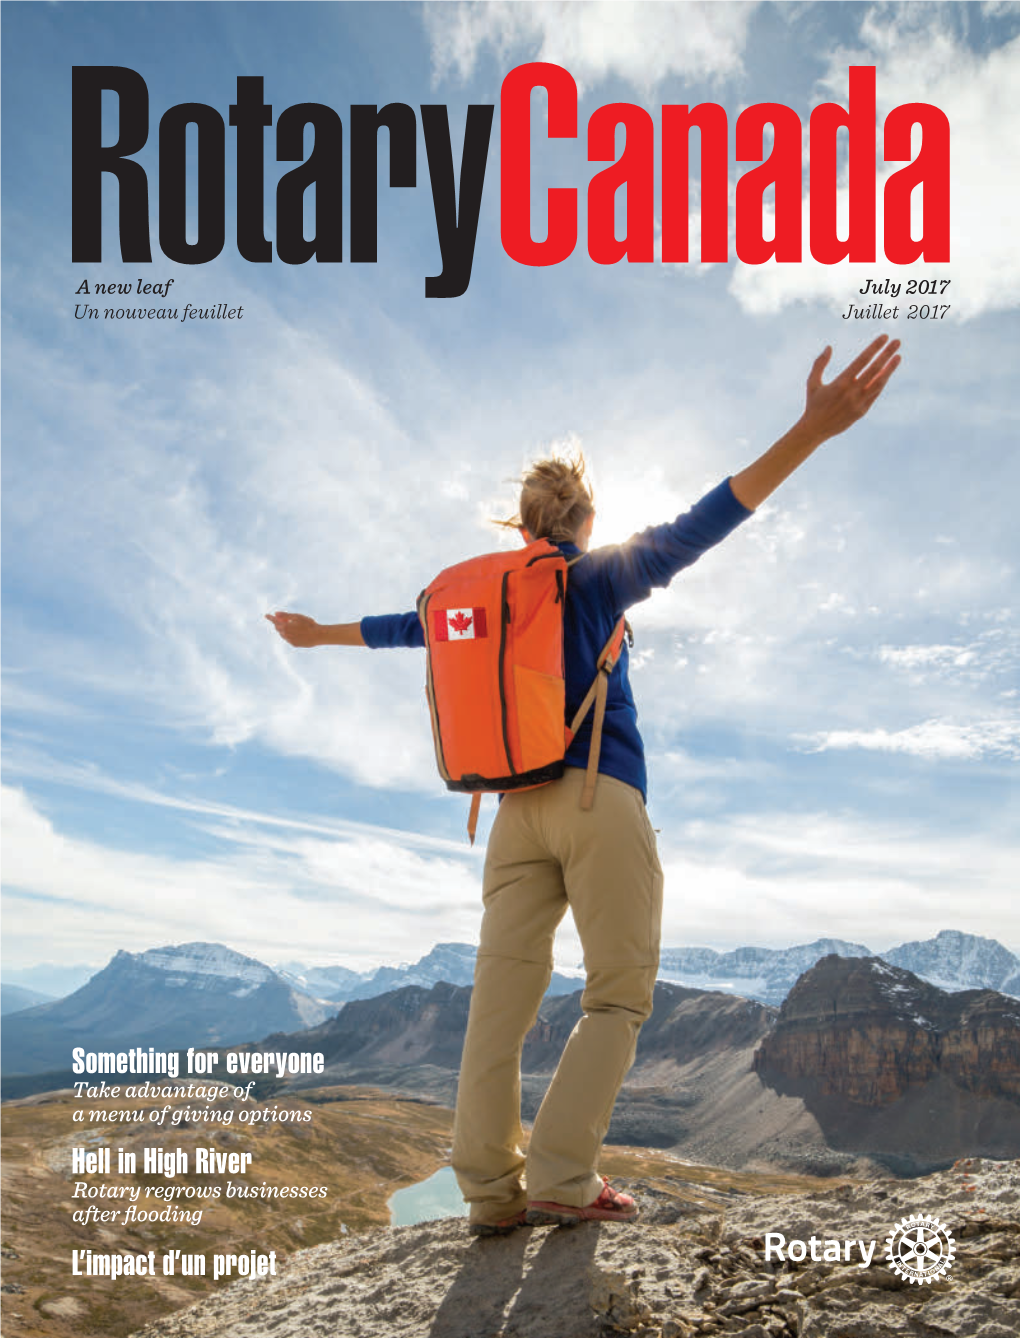 The Rotary Canada